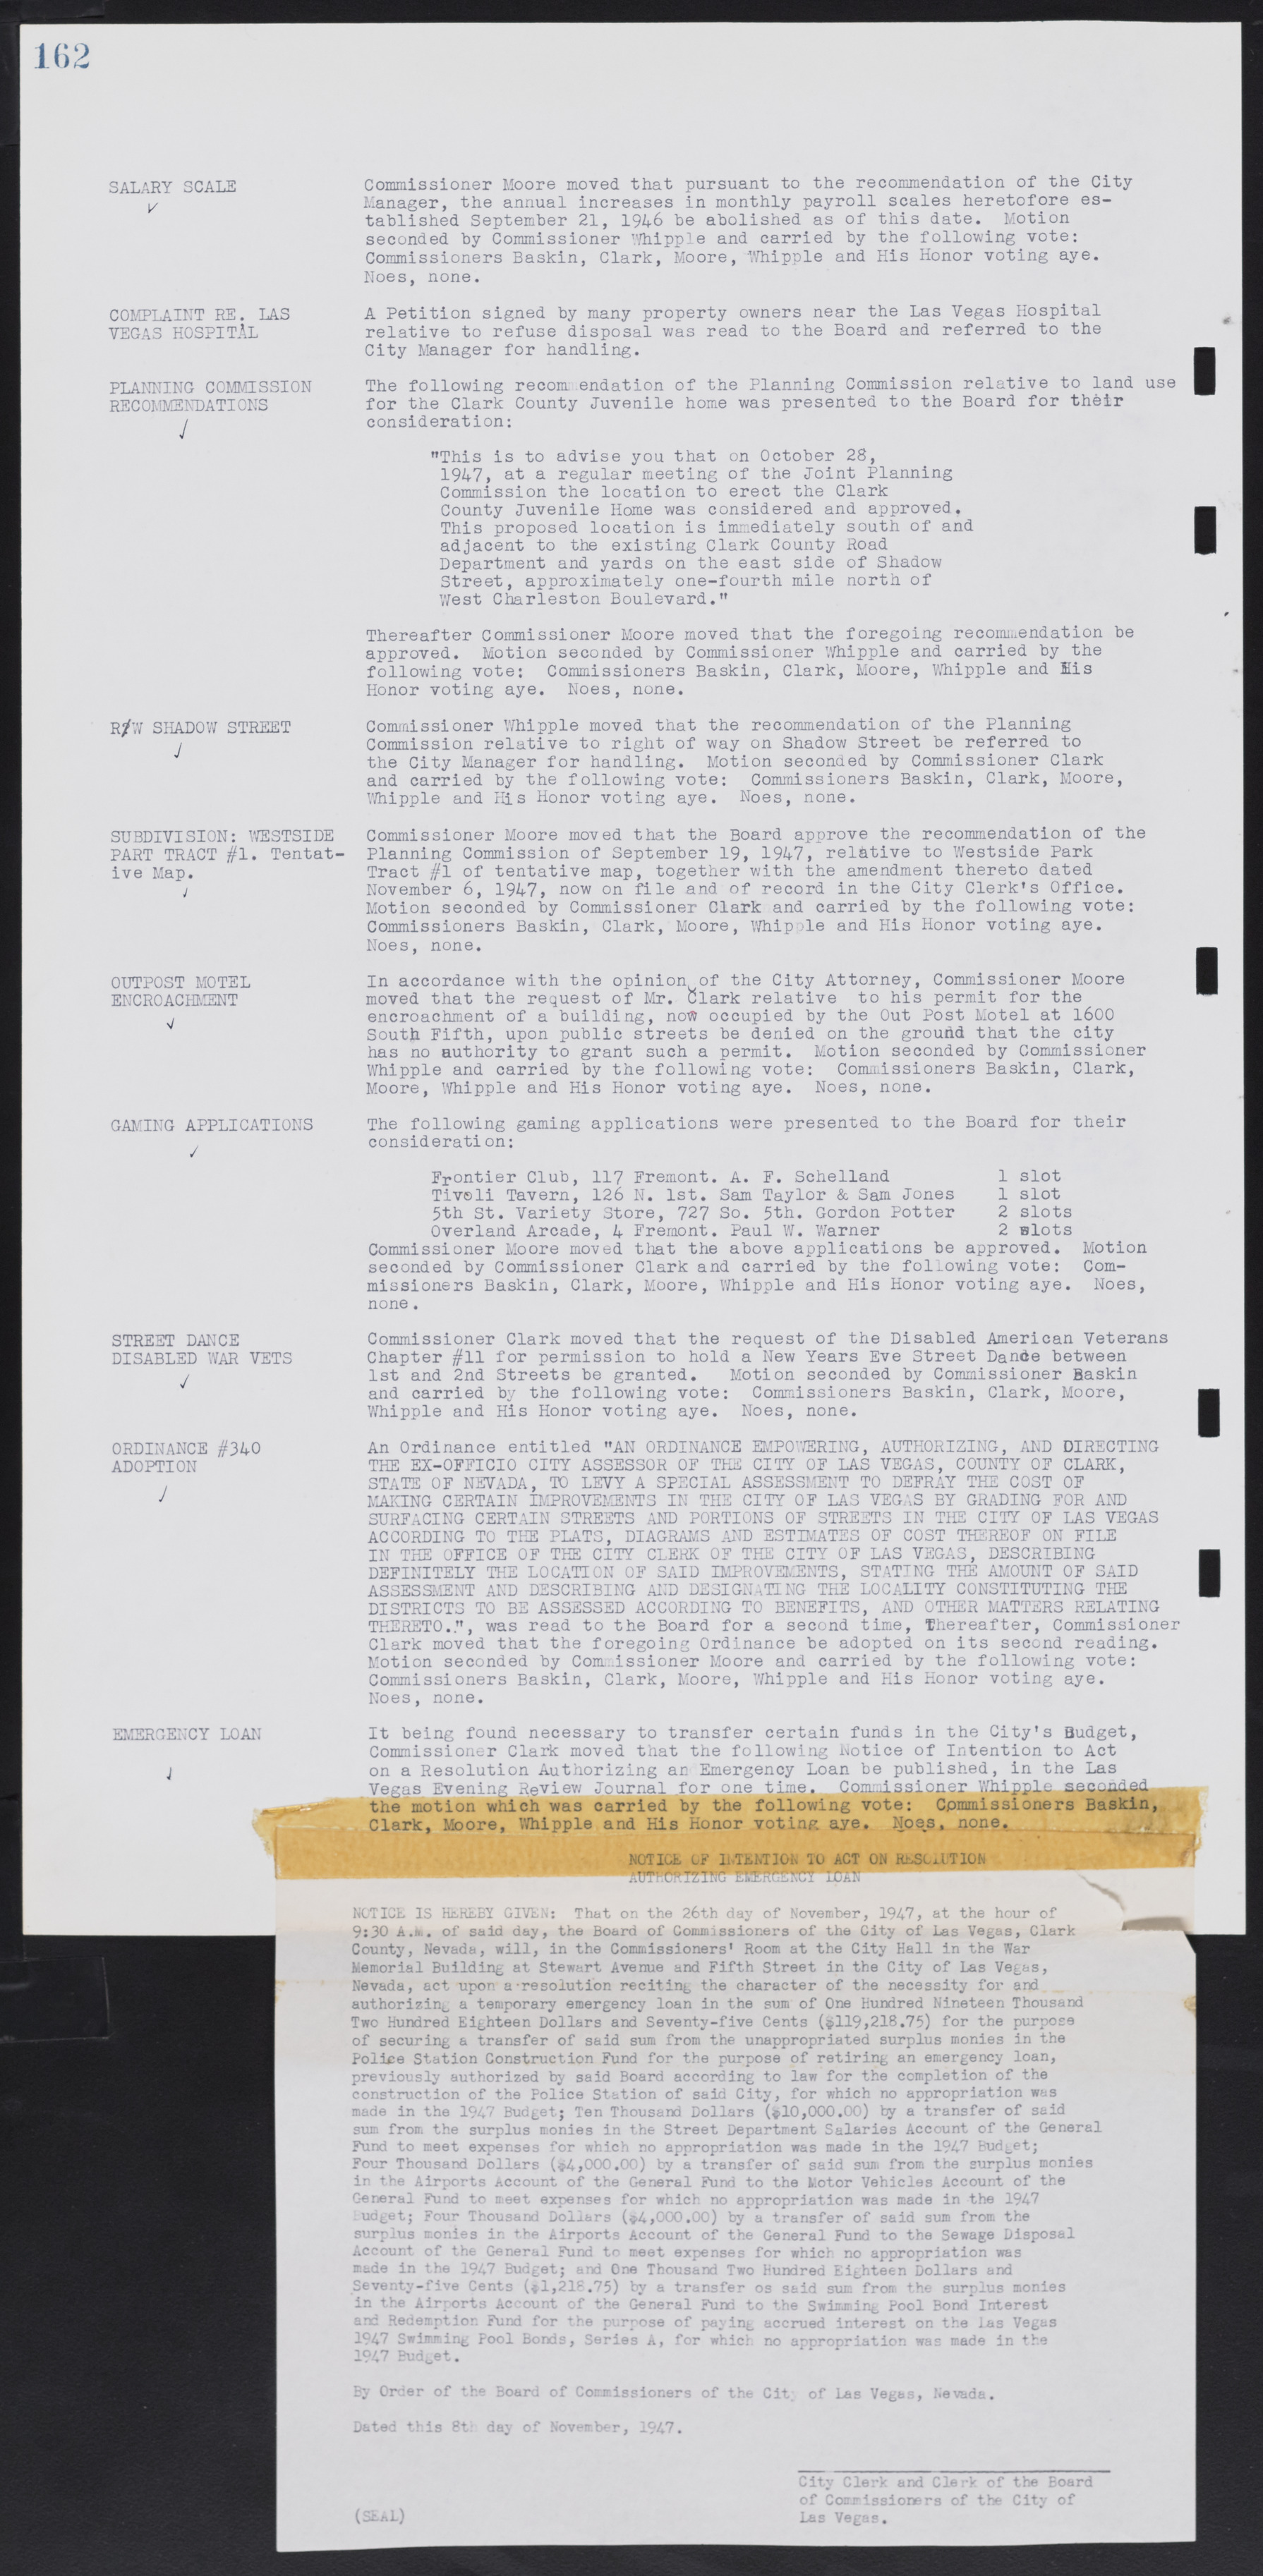 Las Vegas City Commission Minutes, January 7, 1947 to October 26, 1949, lvc000006-182